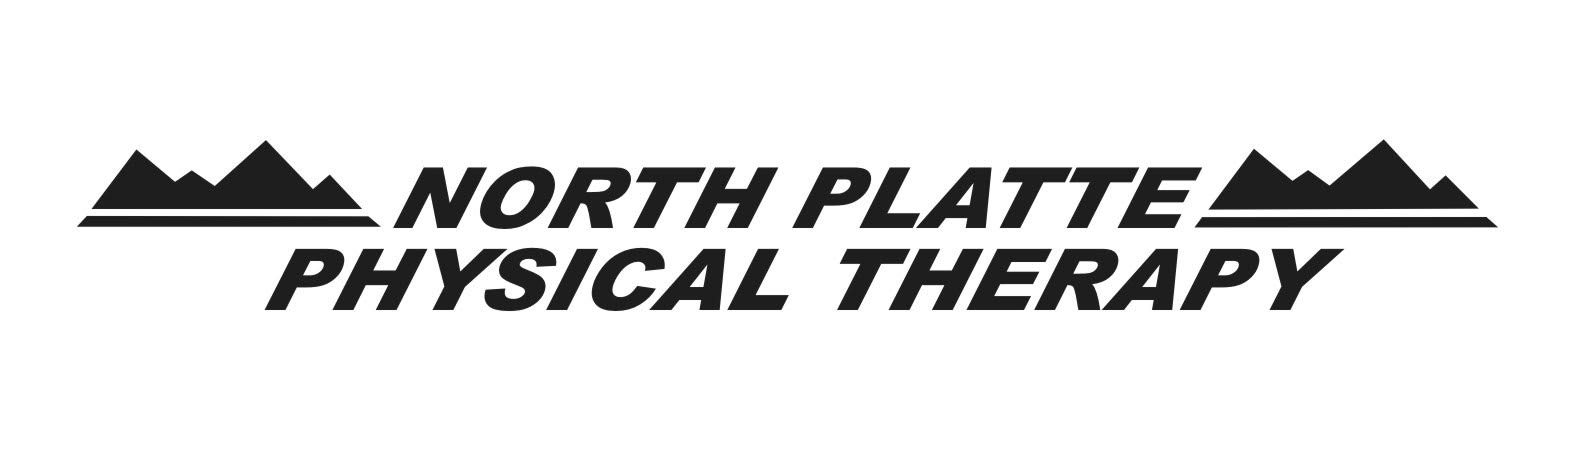 north platte logo (2)